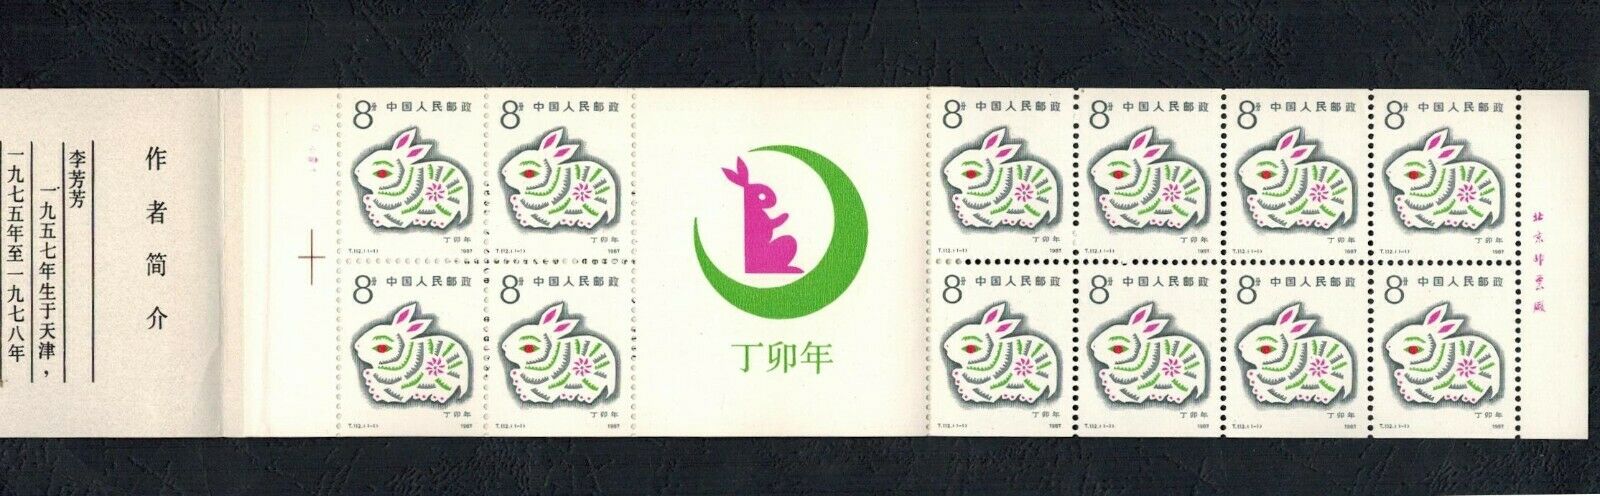 China 1987 - Anul iepurelui, carnet filatelic